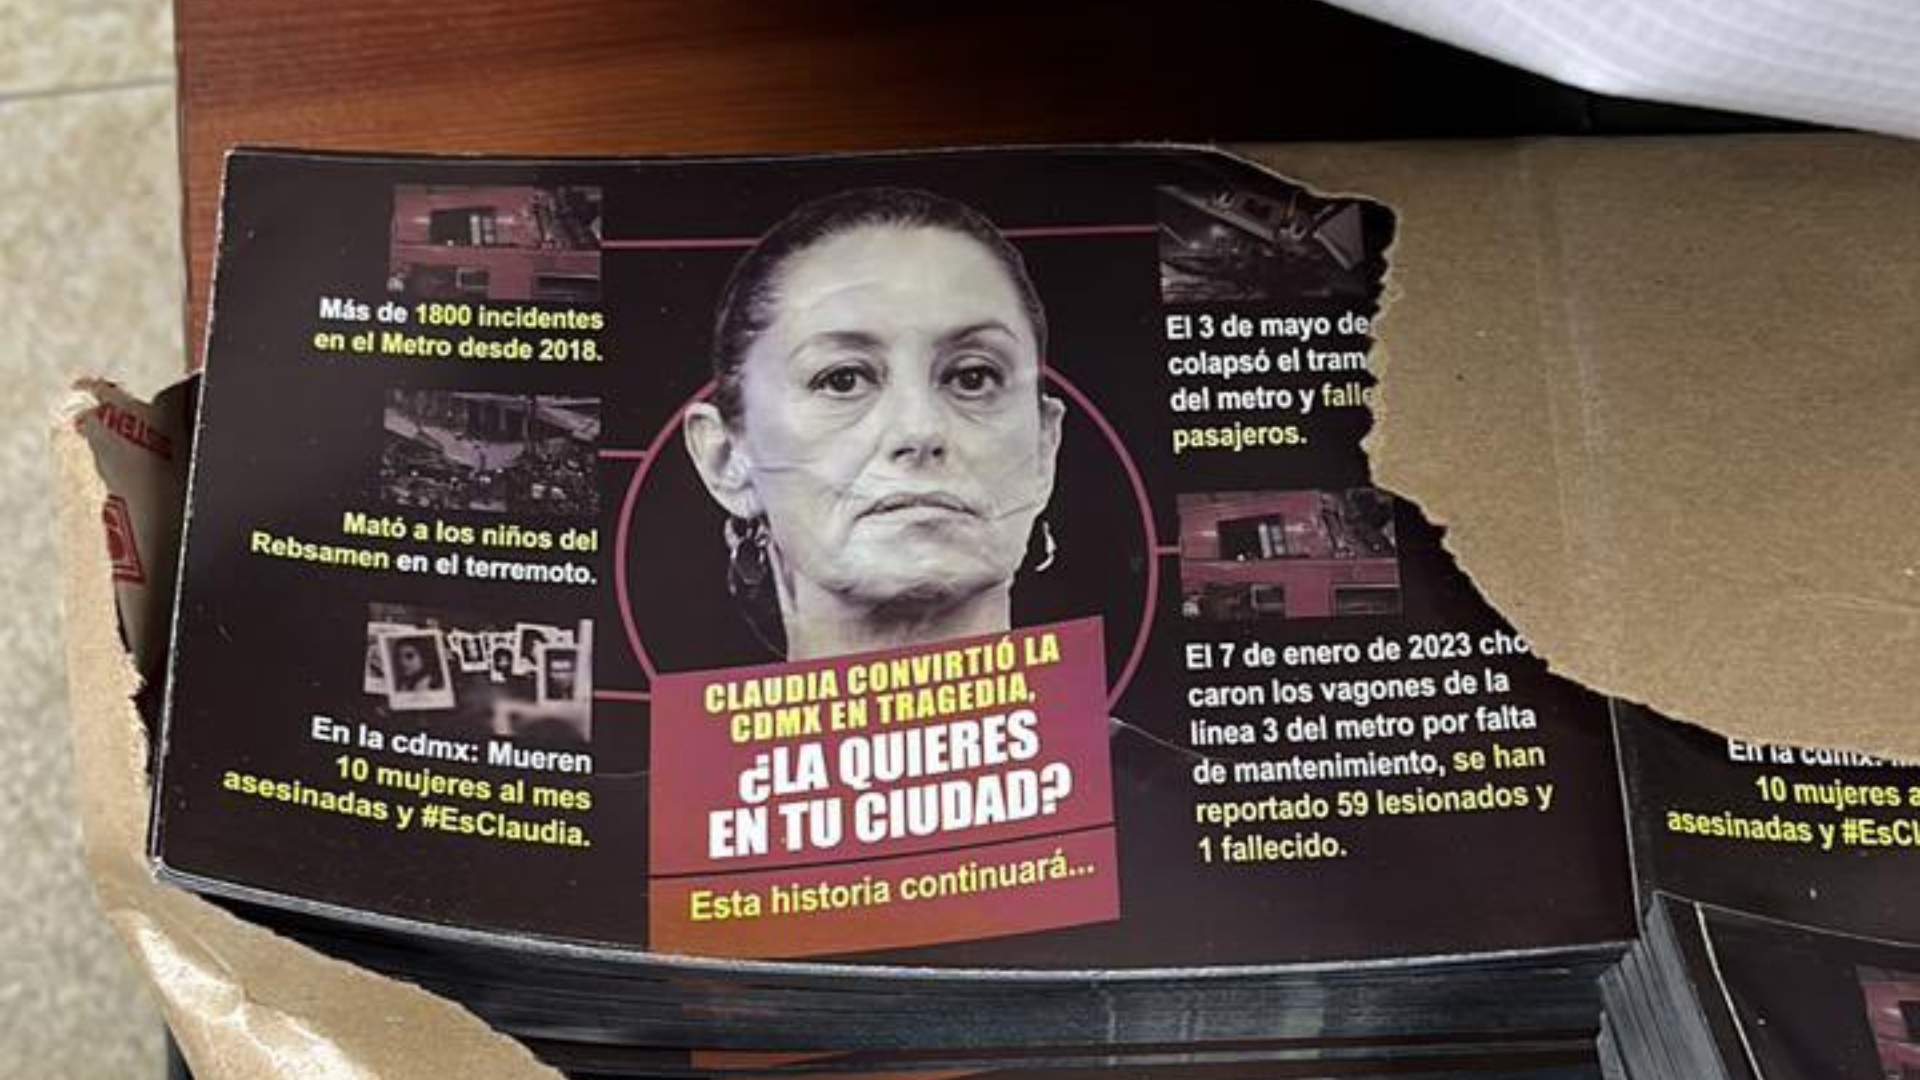 Propaganda against Sheinbaum in Cuaiuhtémoc mayor's office (special)